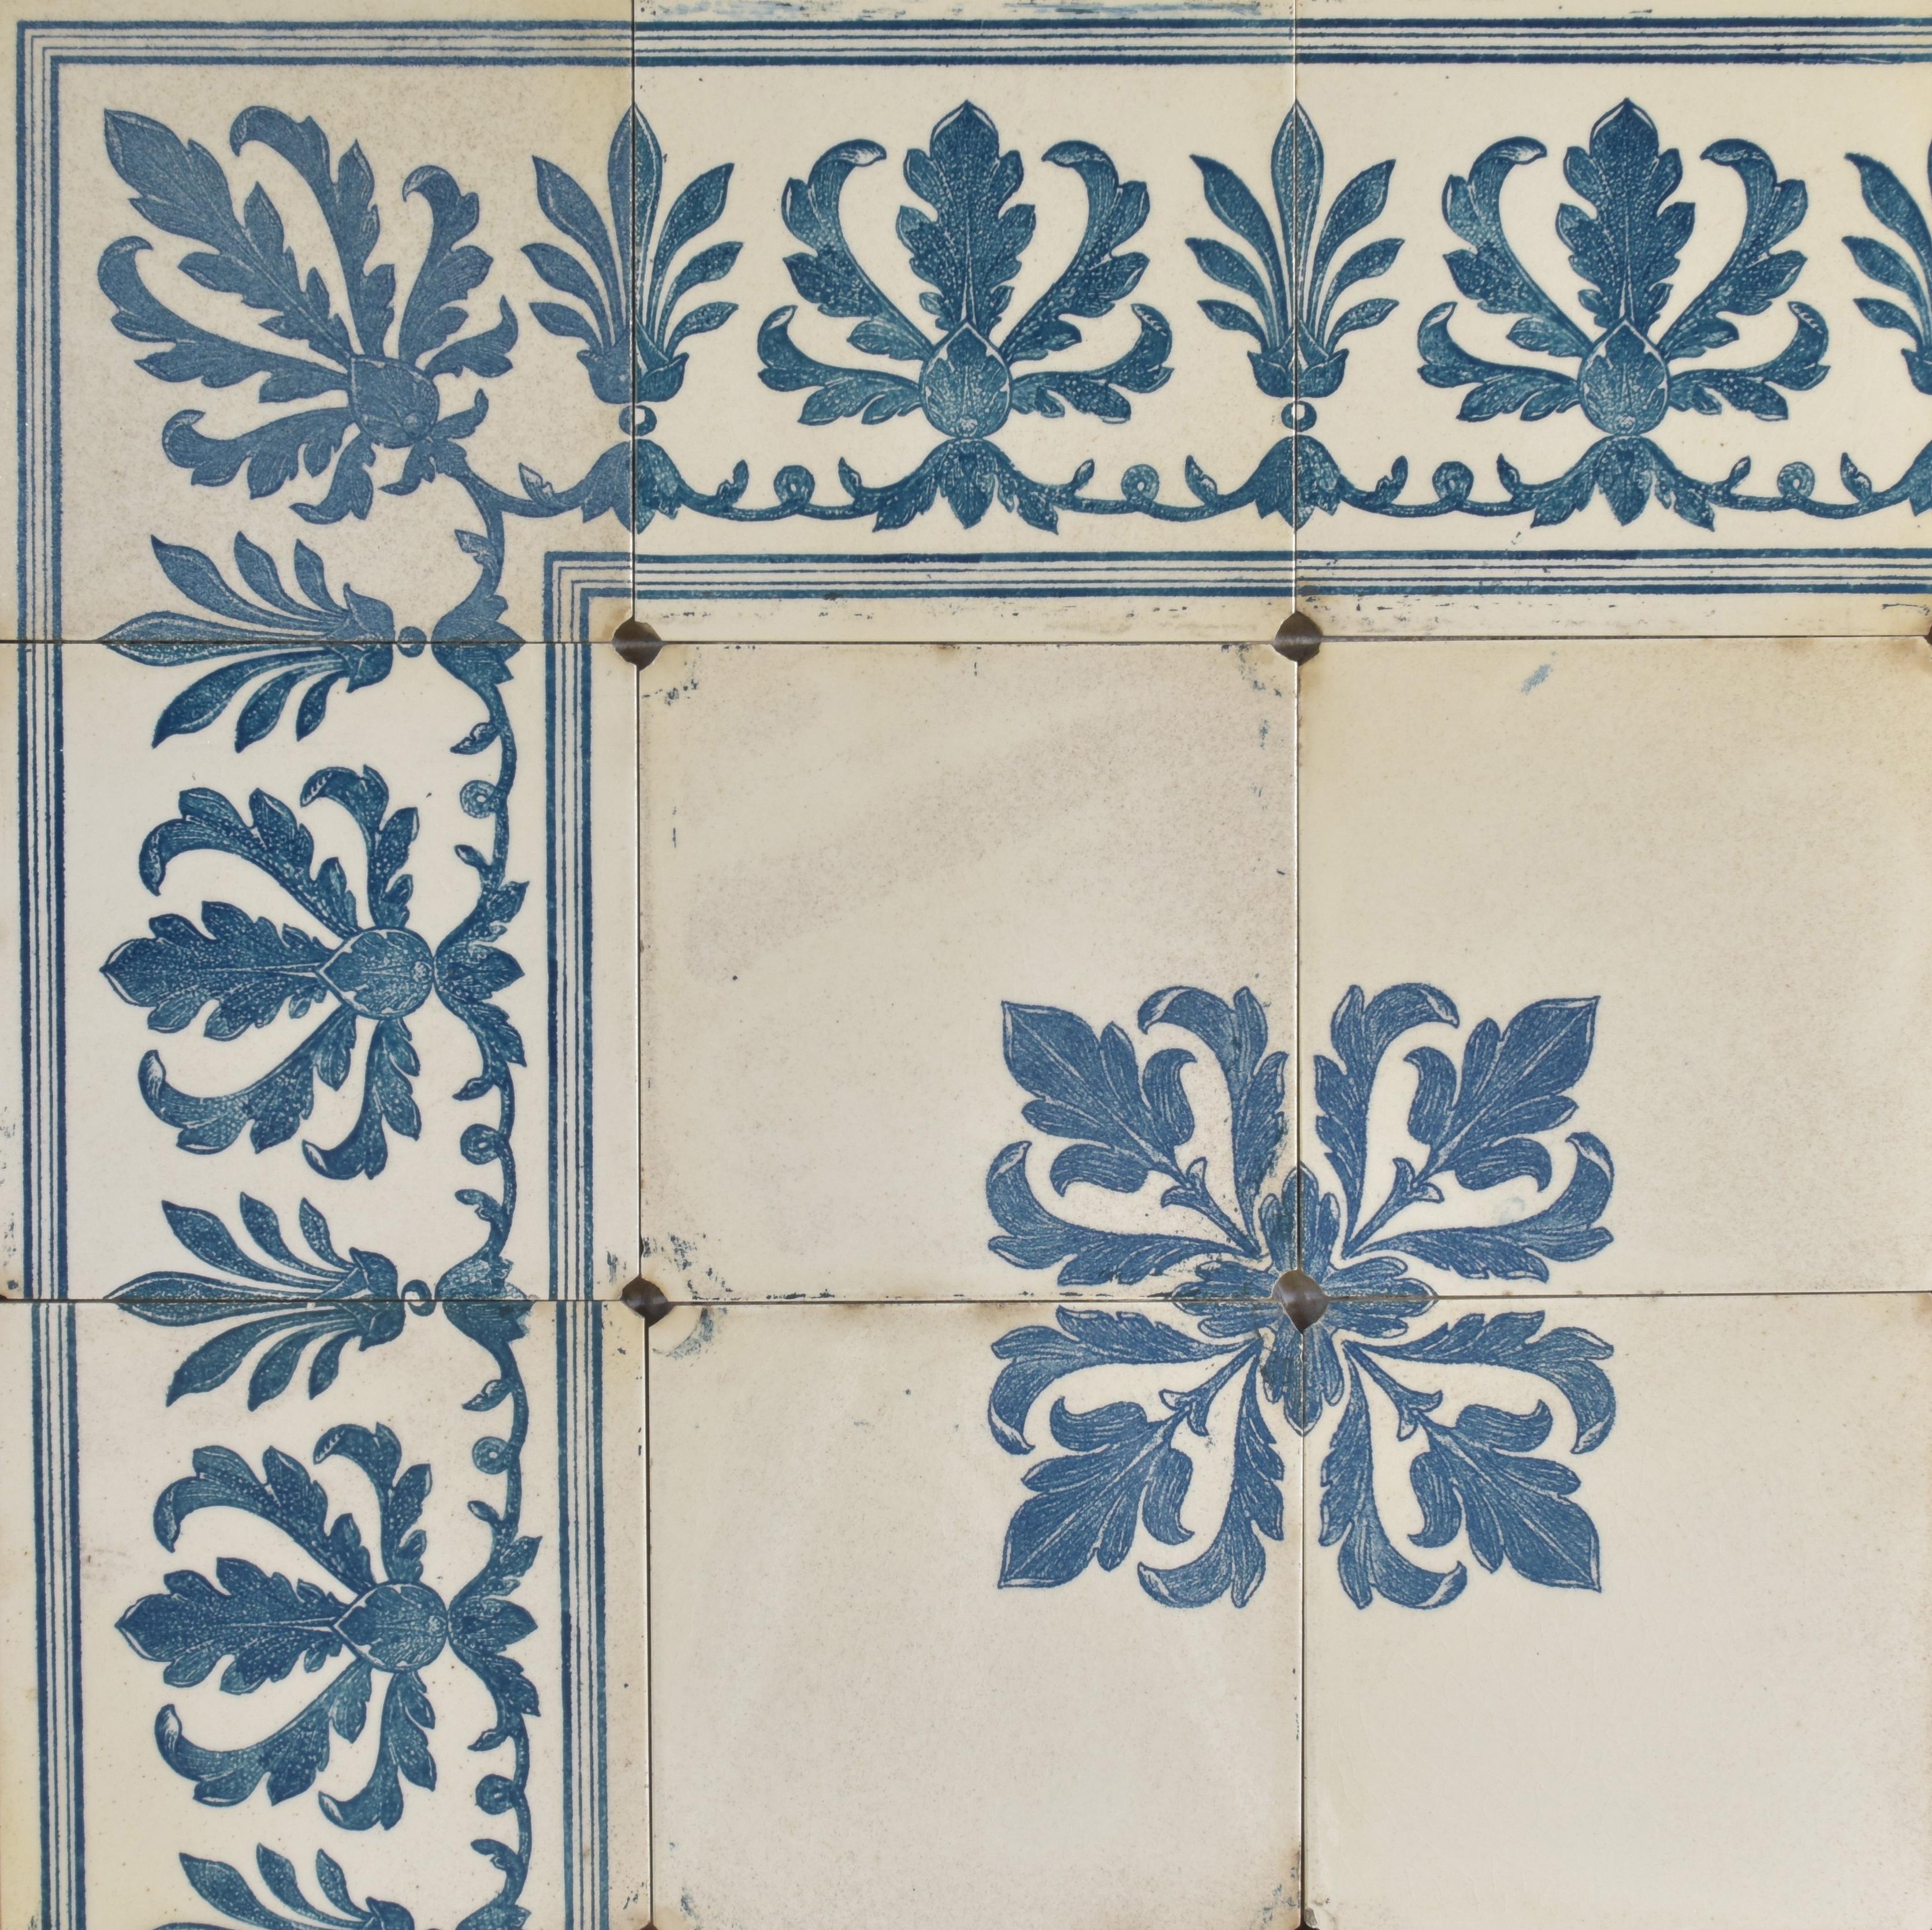 Antique Blue and White Portuguese Tiles Framed in Modern Wood Frames 2